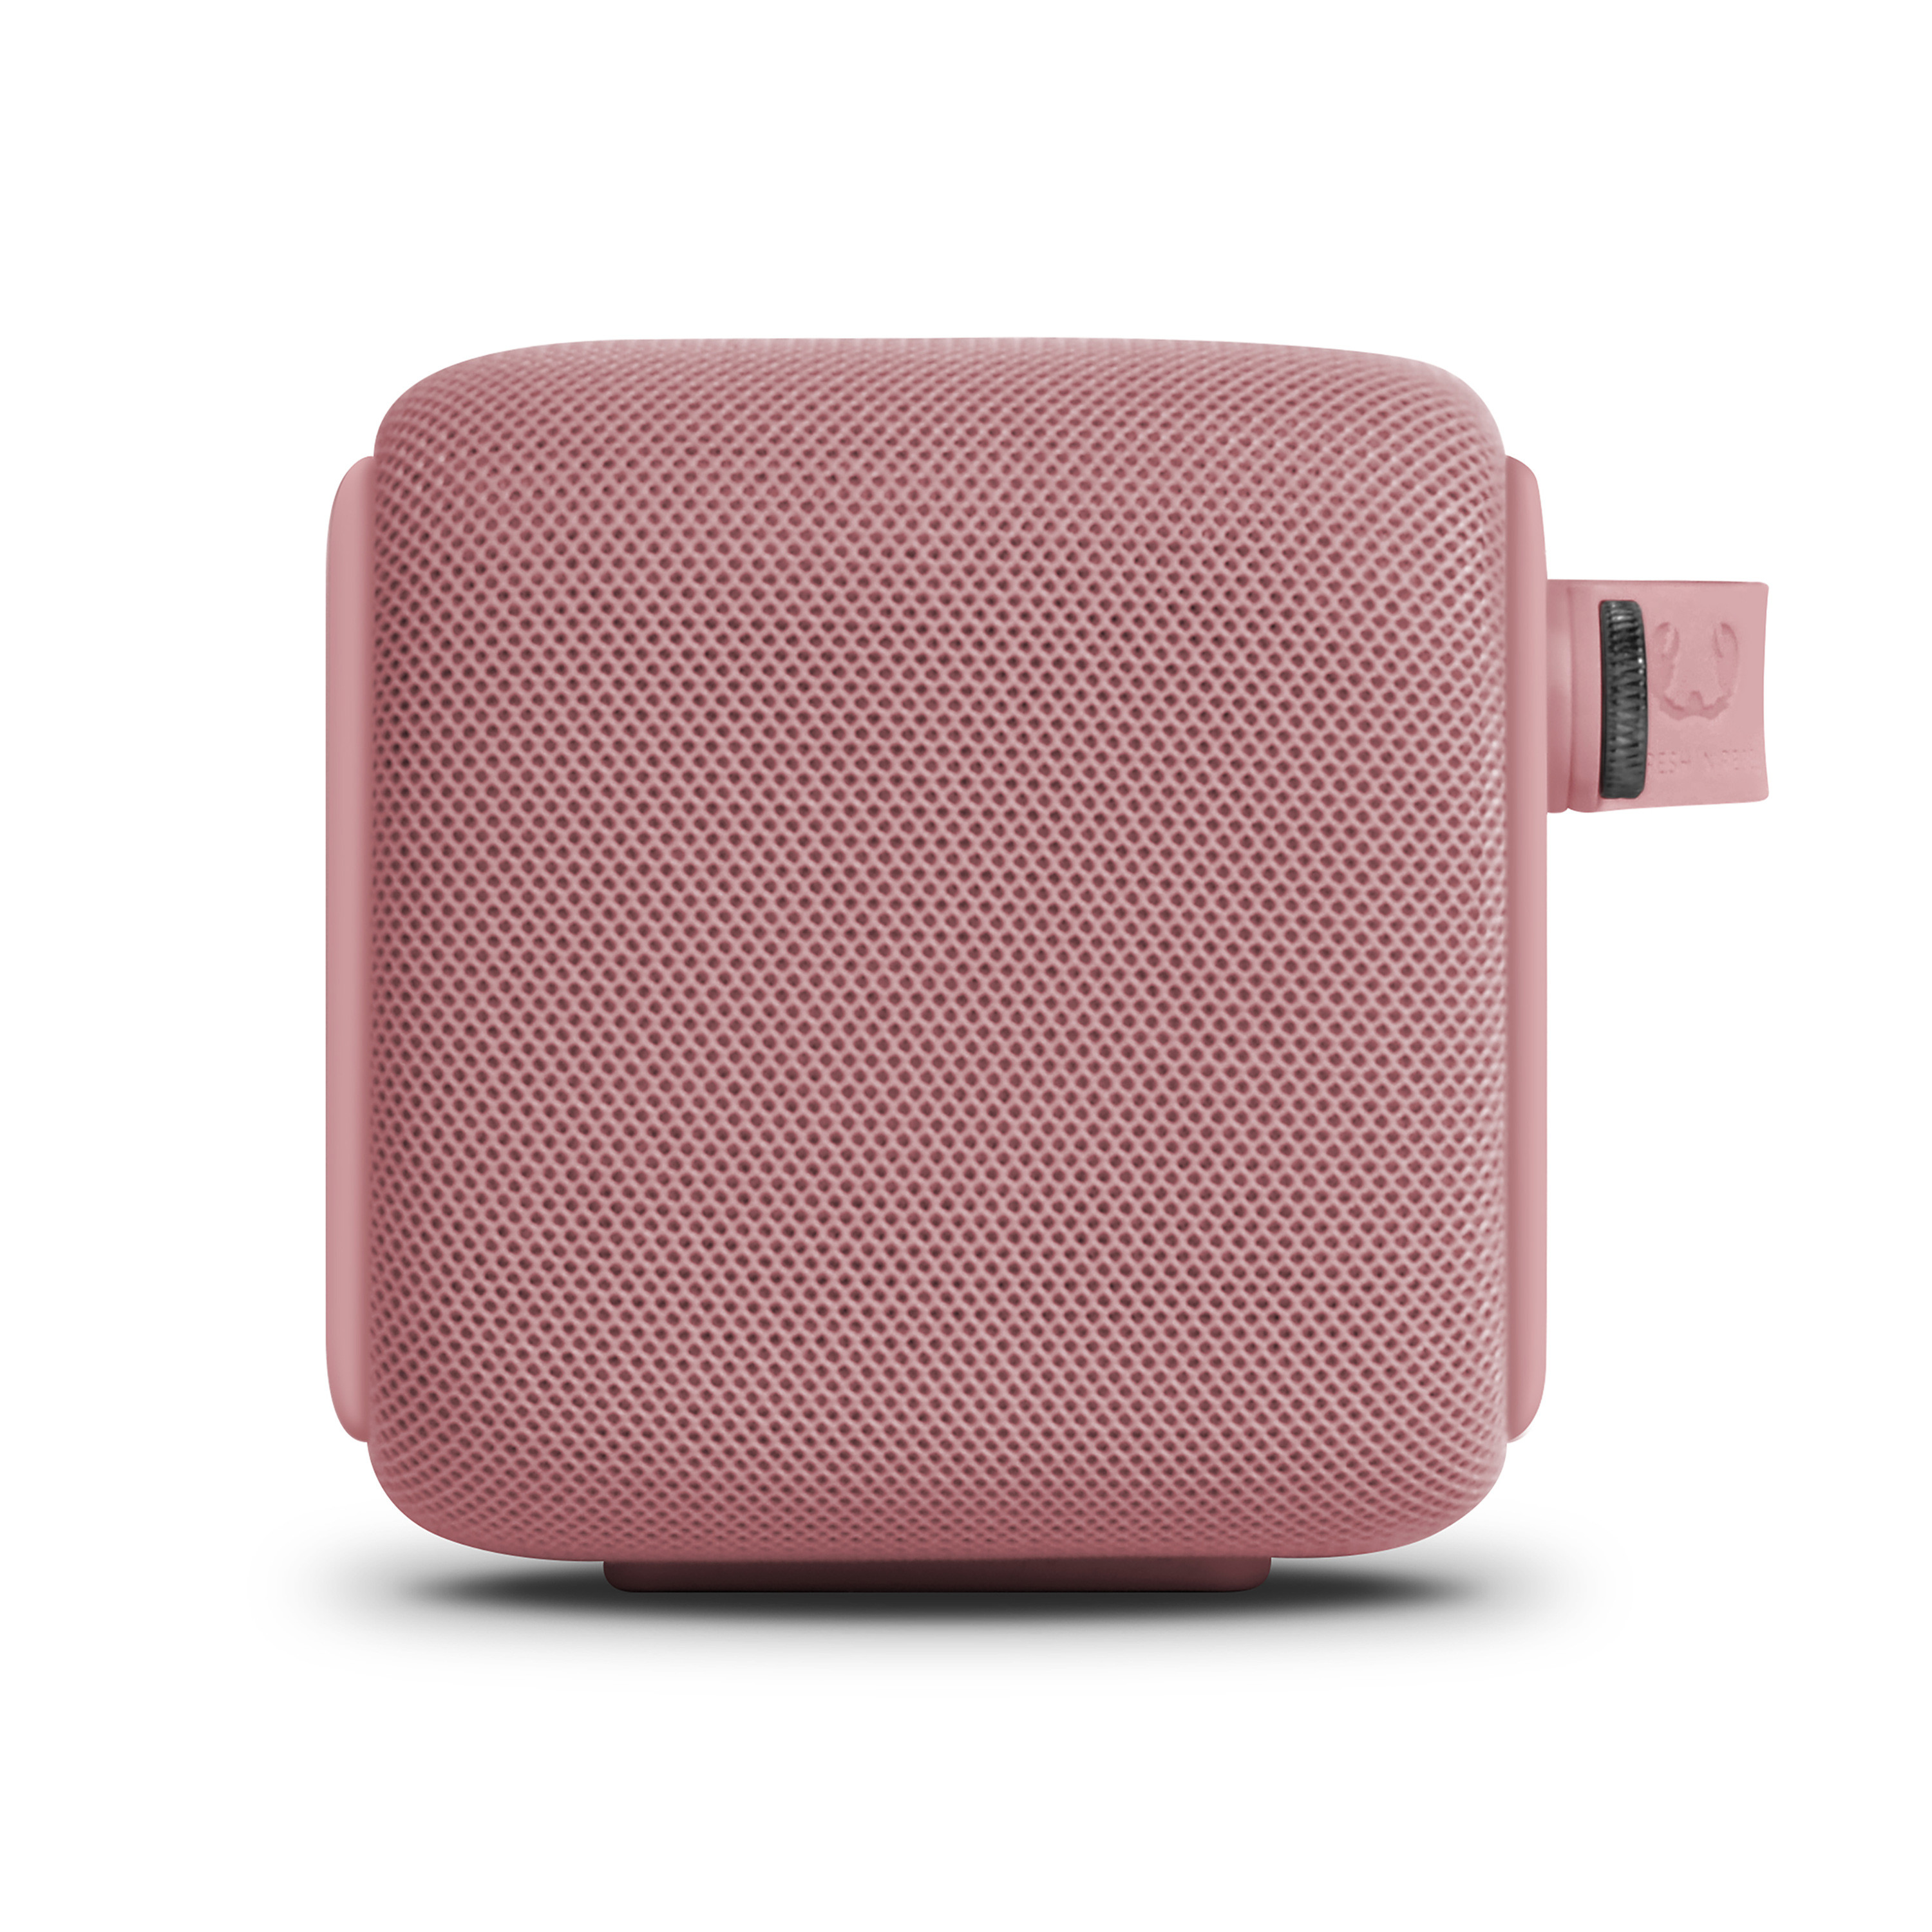 Altavoz Bluetooth Fresh'n Rebel Rockbox Bold S Waterproof Dusty Pink